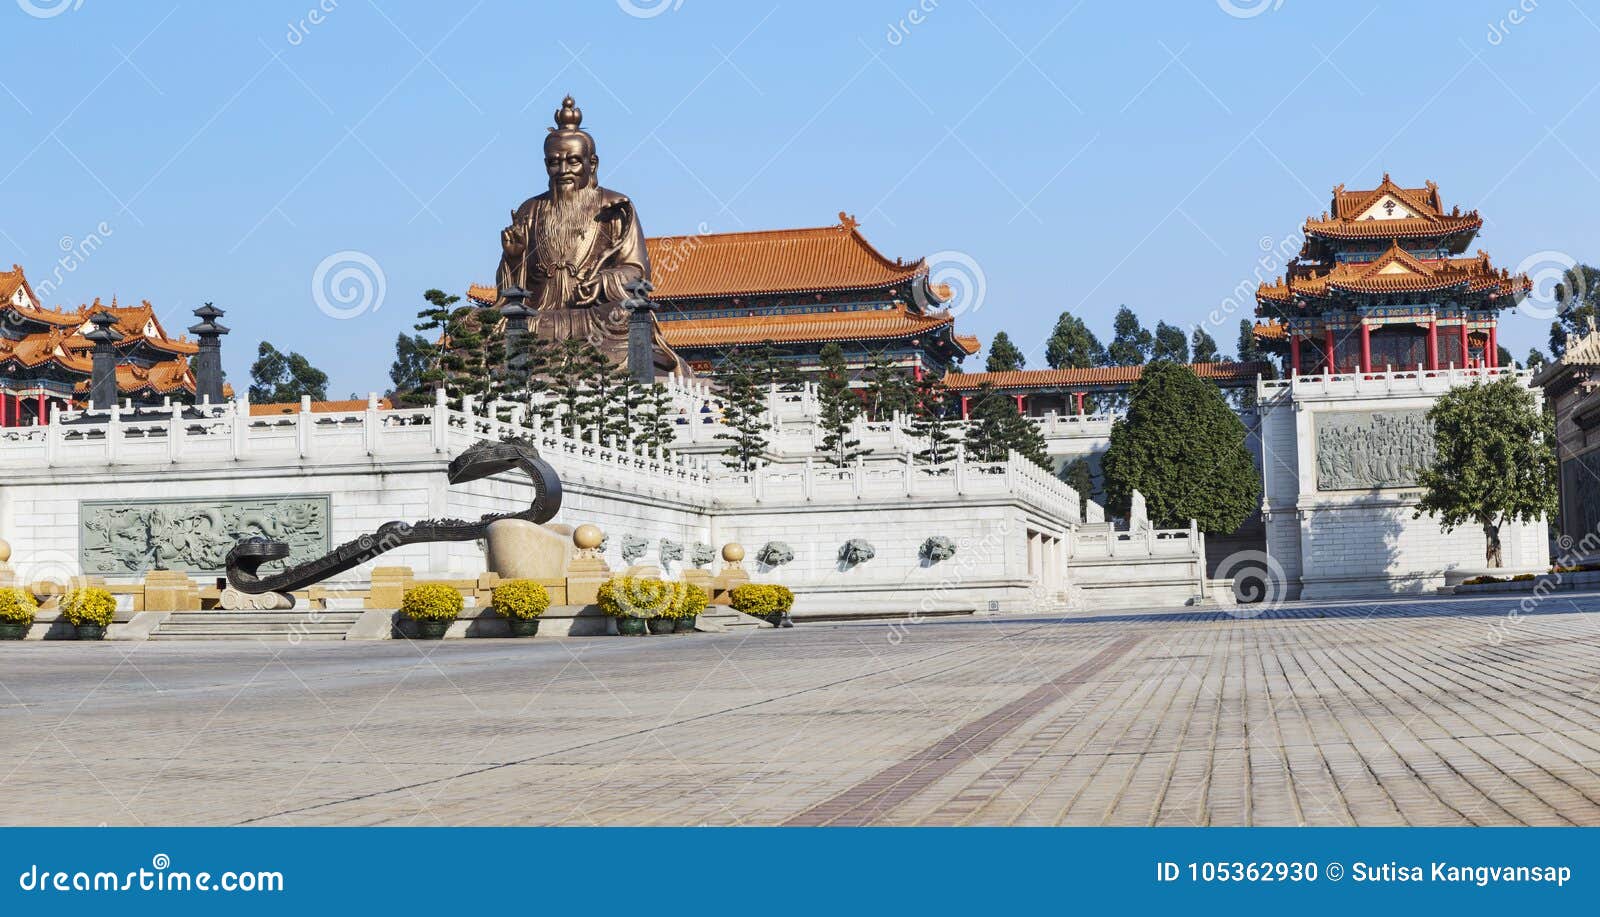 laozi statue in yuanxuan taoist temple guangzhou, china